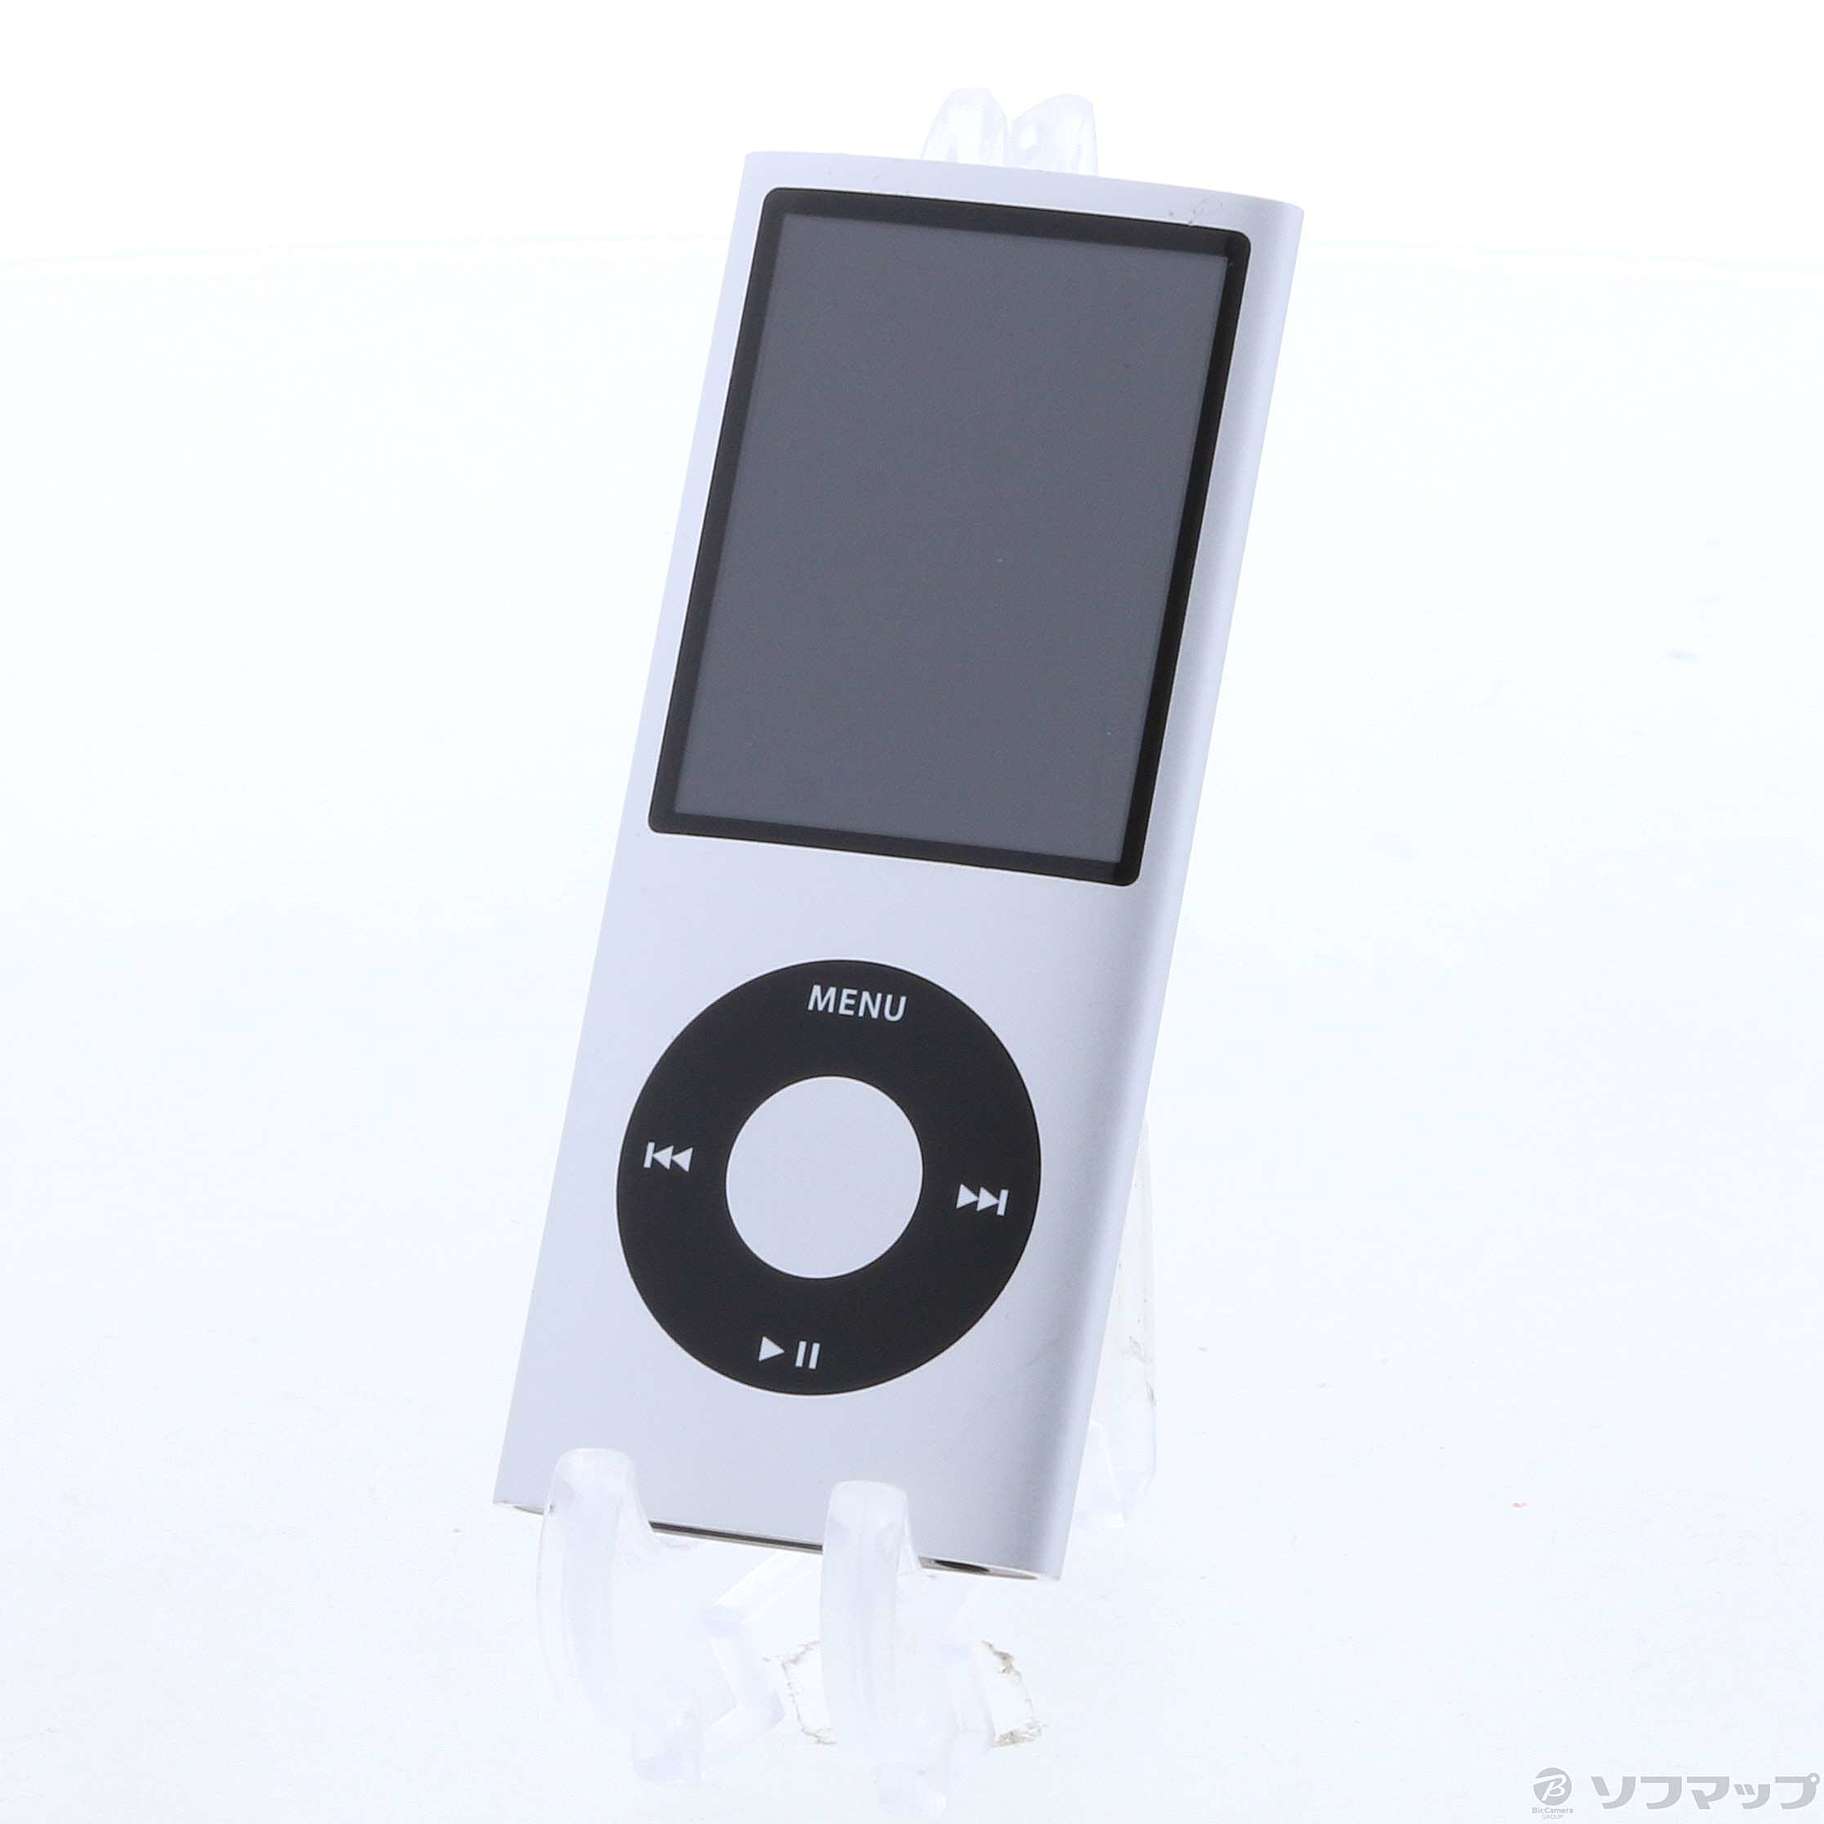 iPod nano シルバー